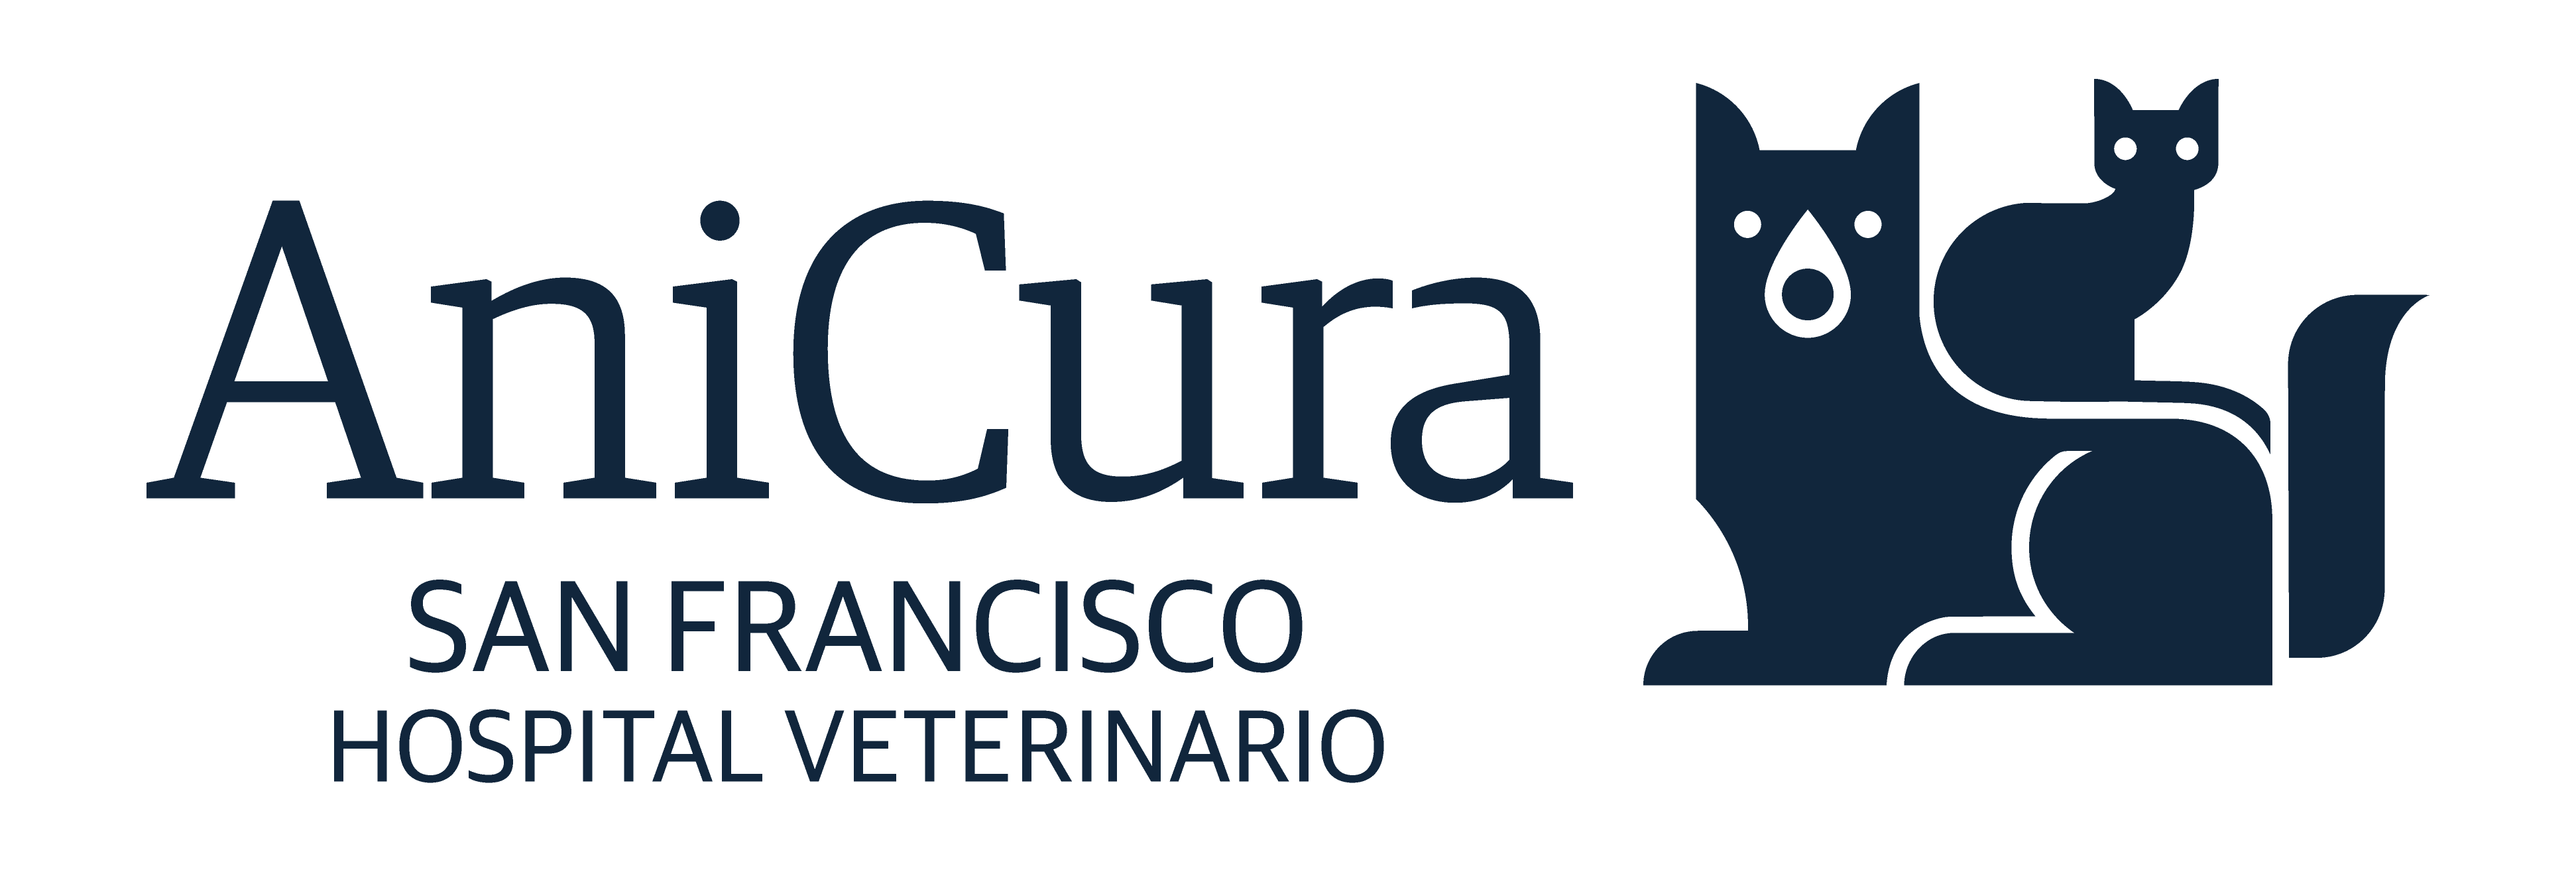 AniCura San Francisco Hospital Veterinario logo